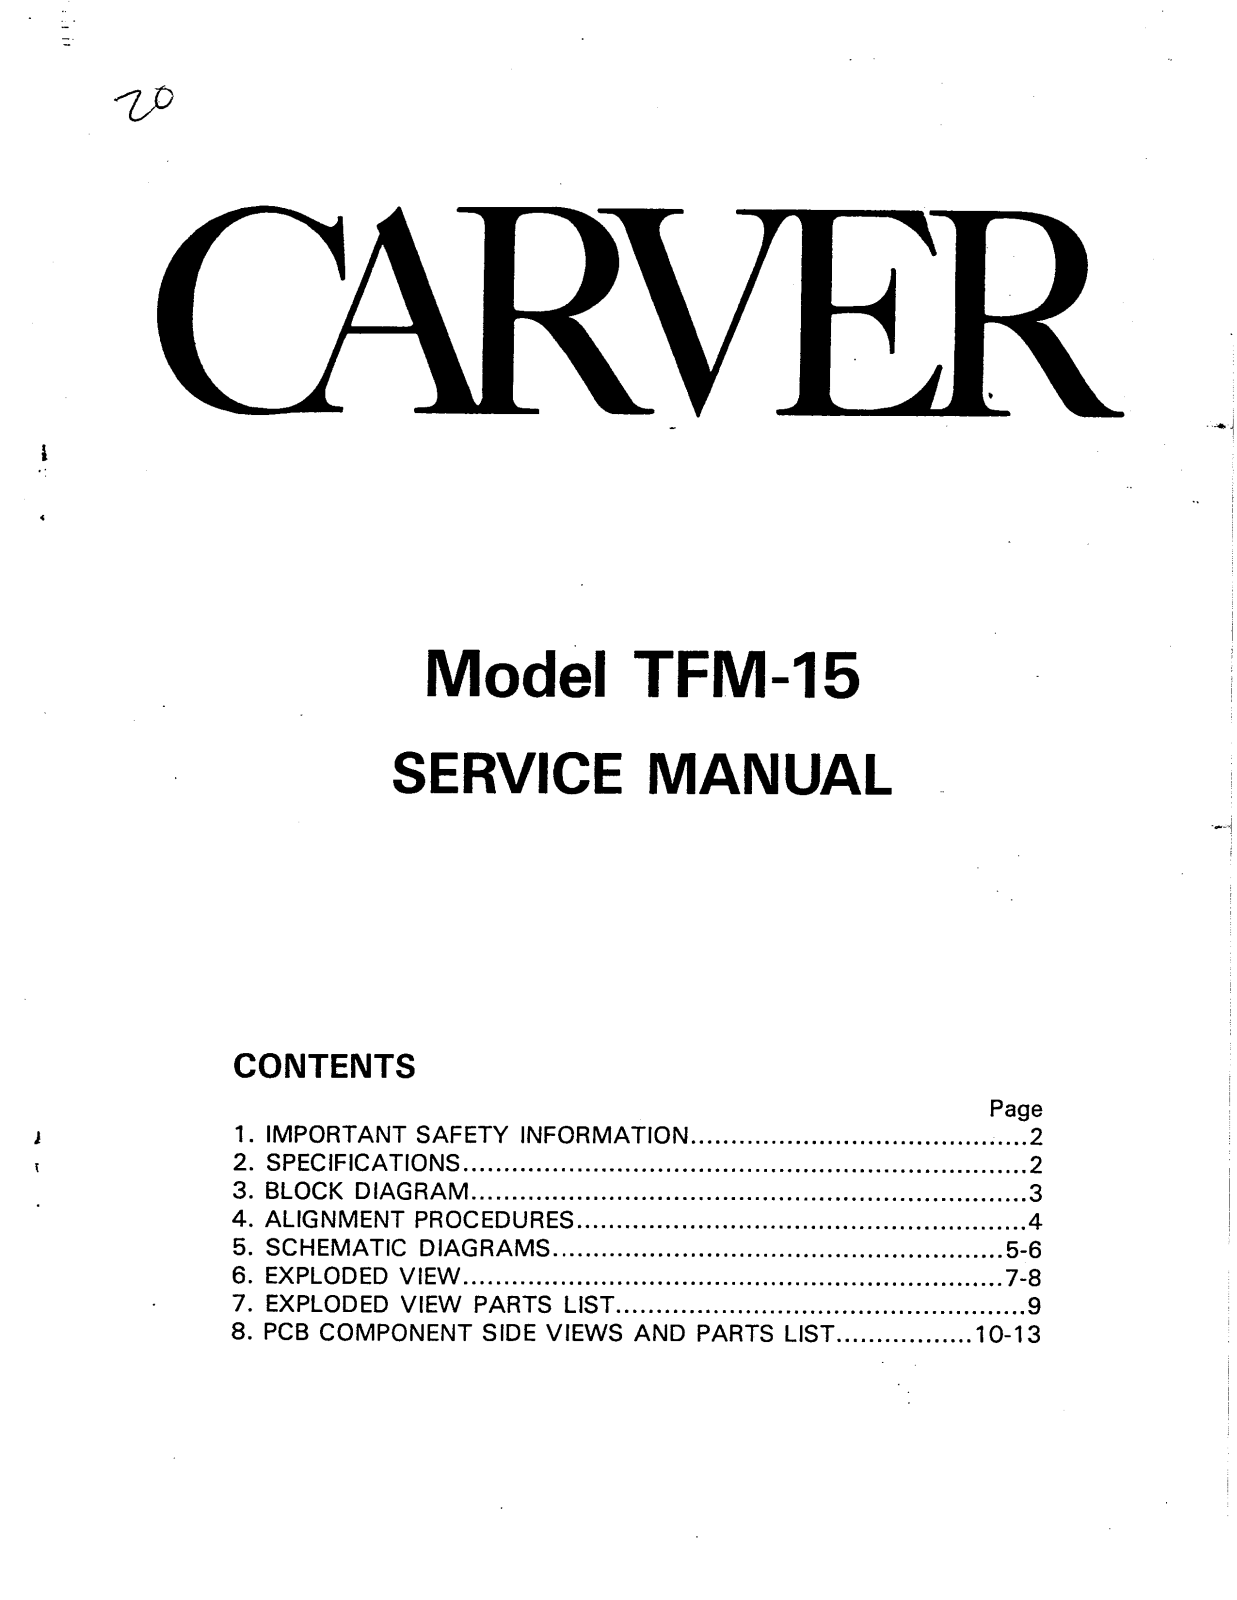 Carver TFM-15 Service manual